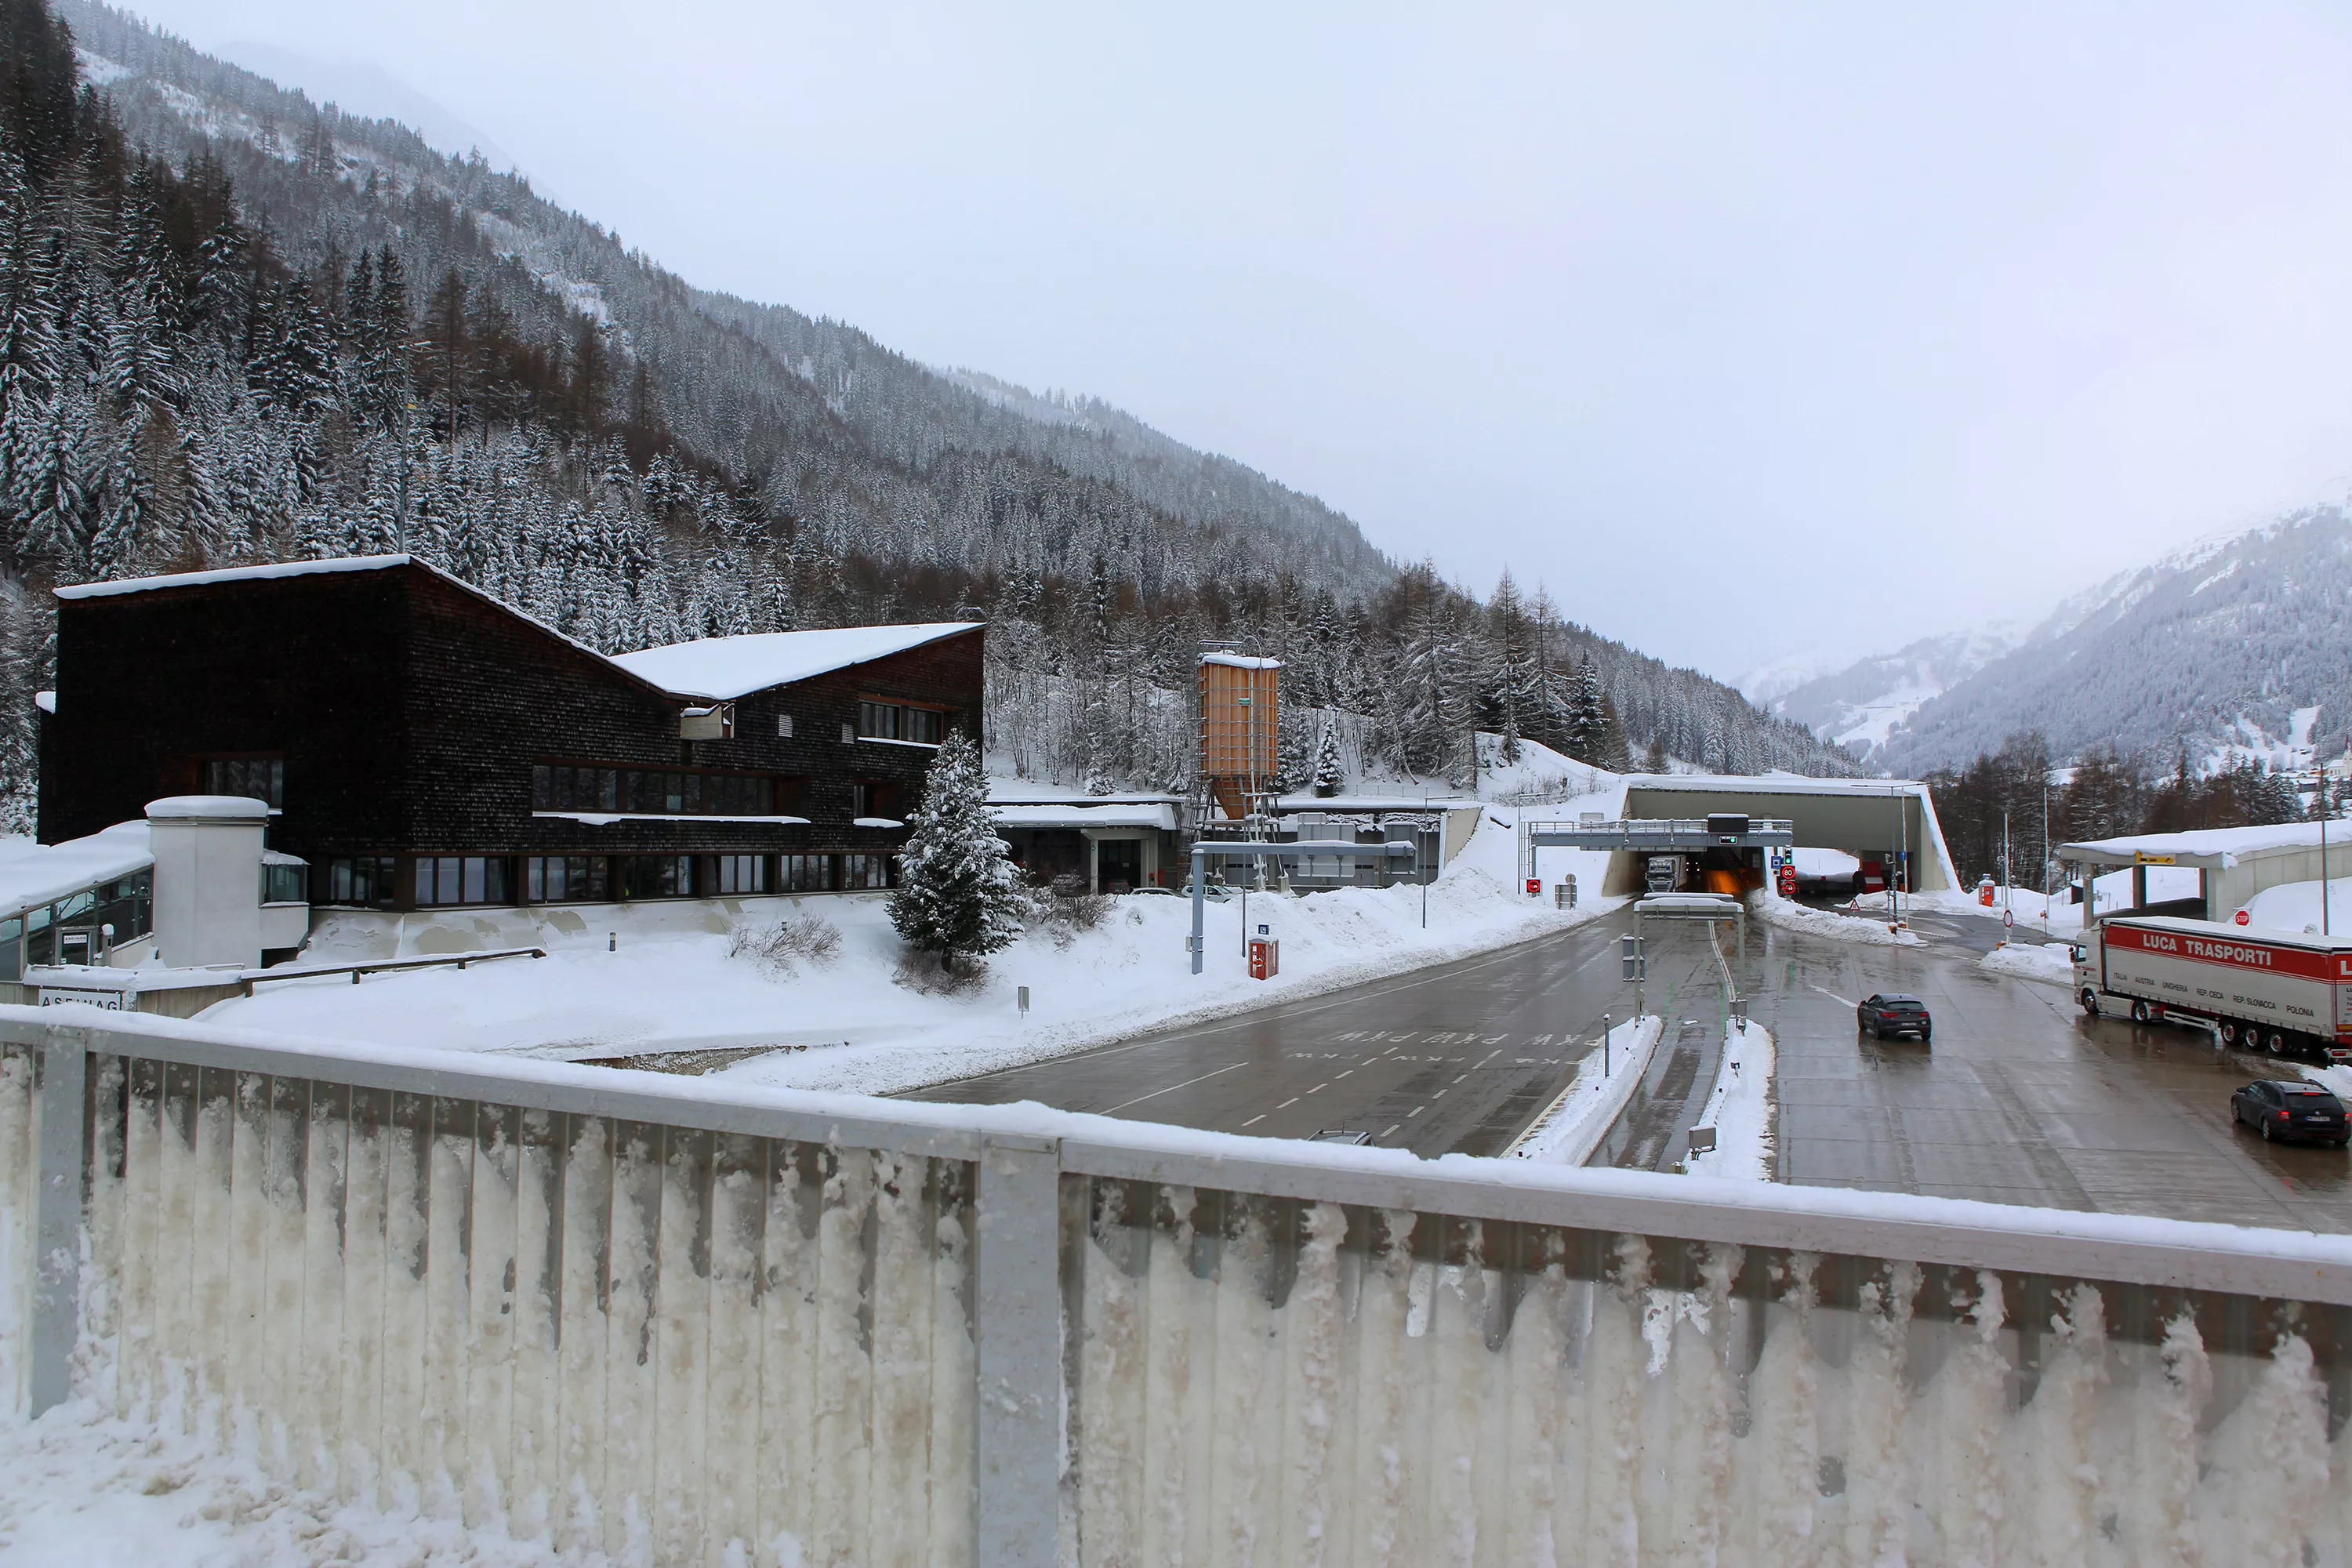 Lawinenschutzgalerie entlang der Arlberg Schnellstraße zum Schutz vor Lawinen 